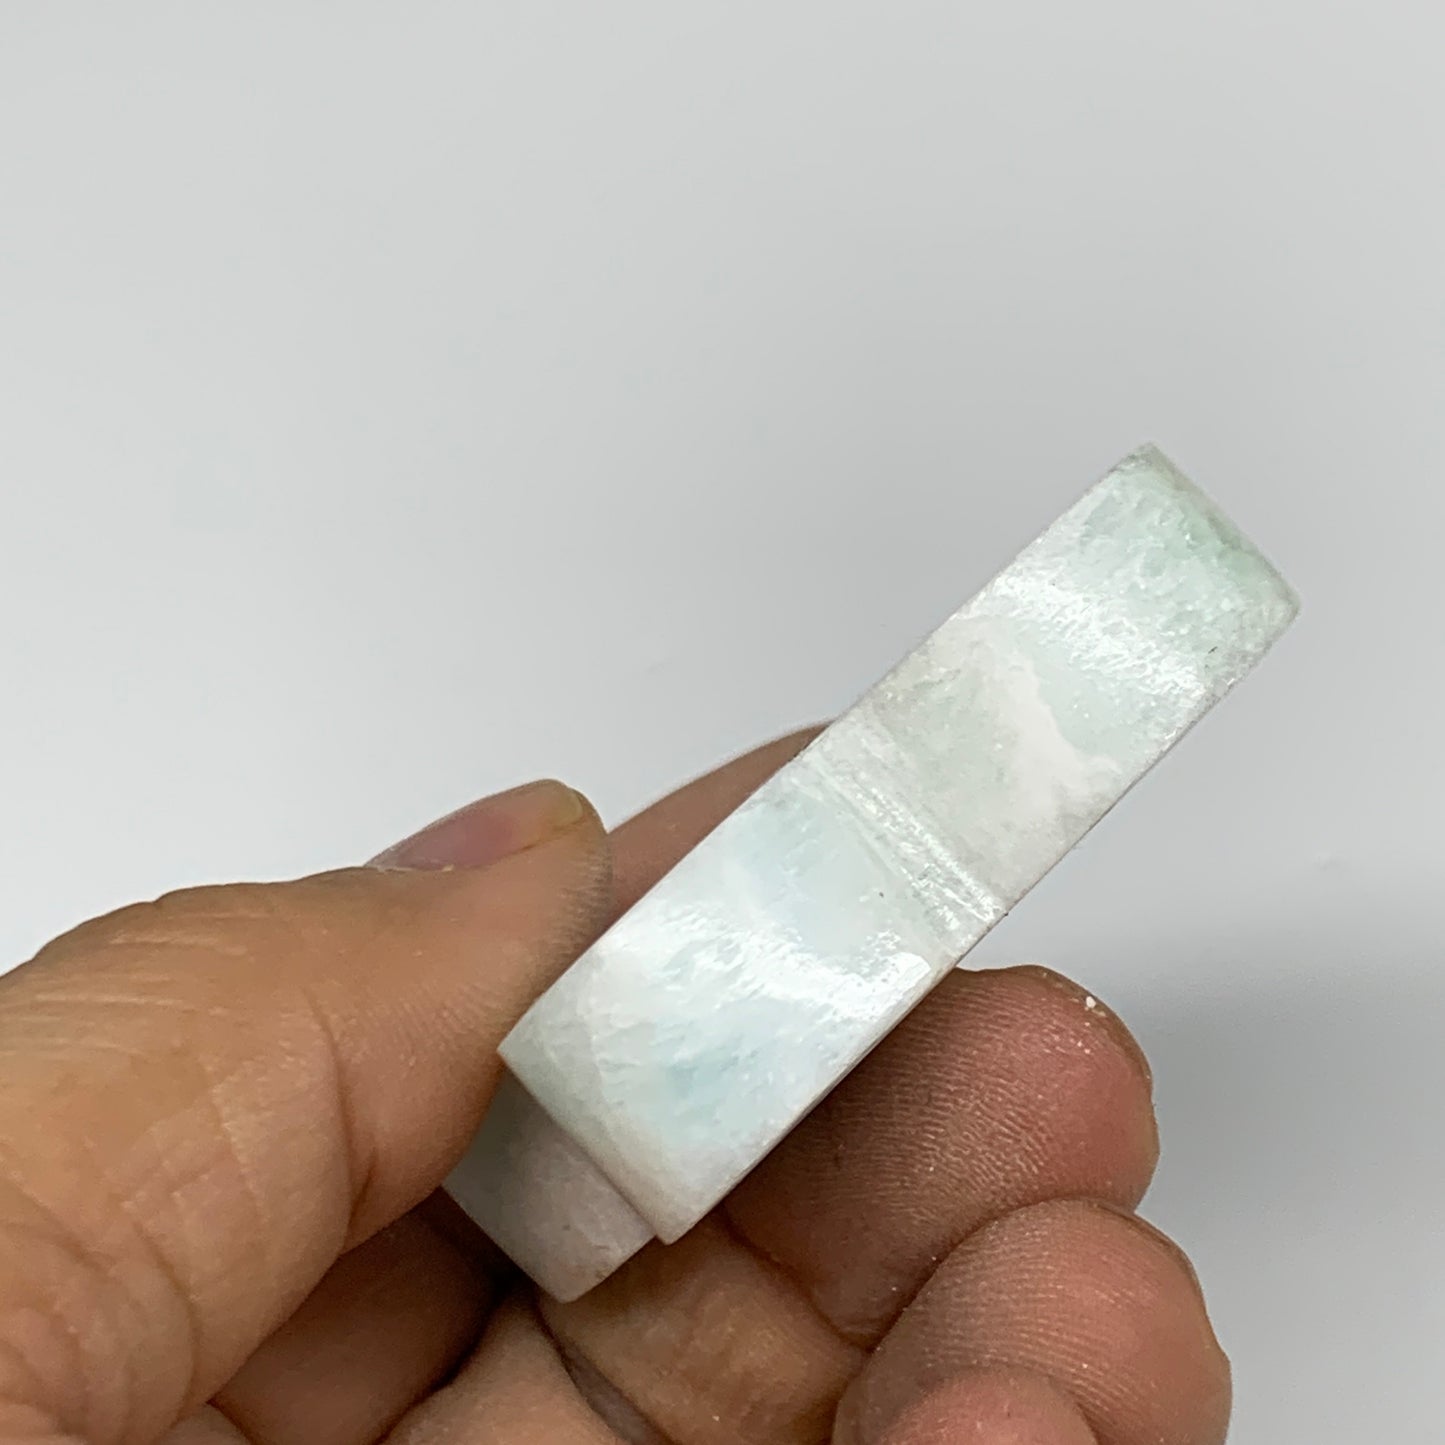 60.1g, 1.9"x1.9"x0.4", Natural Caribbean Calcite Cloud Crystal @Afghanistan, B31